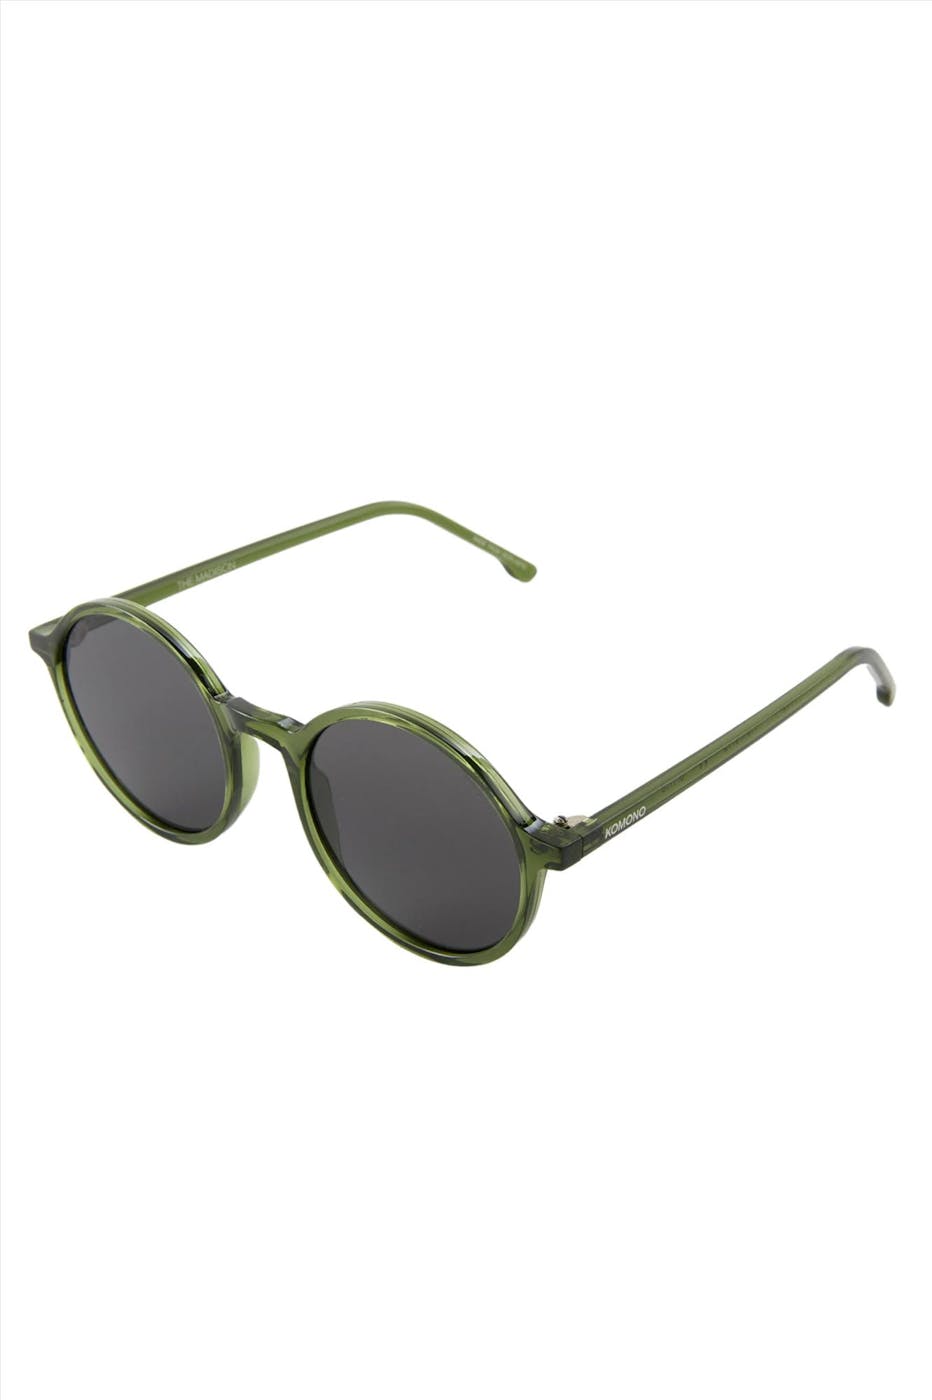 Komono - Groene Madison Fern zonnebril